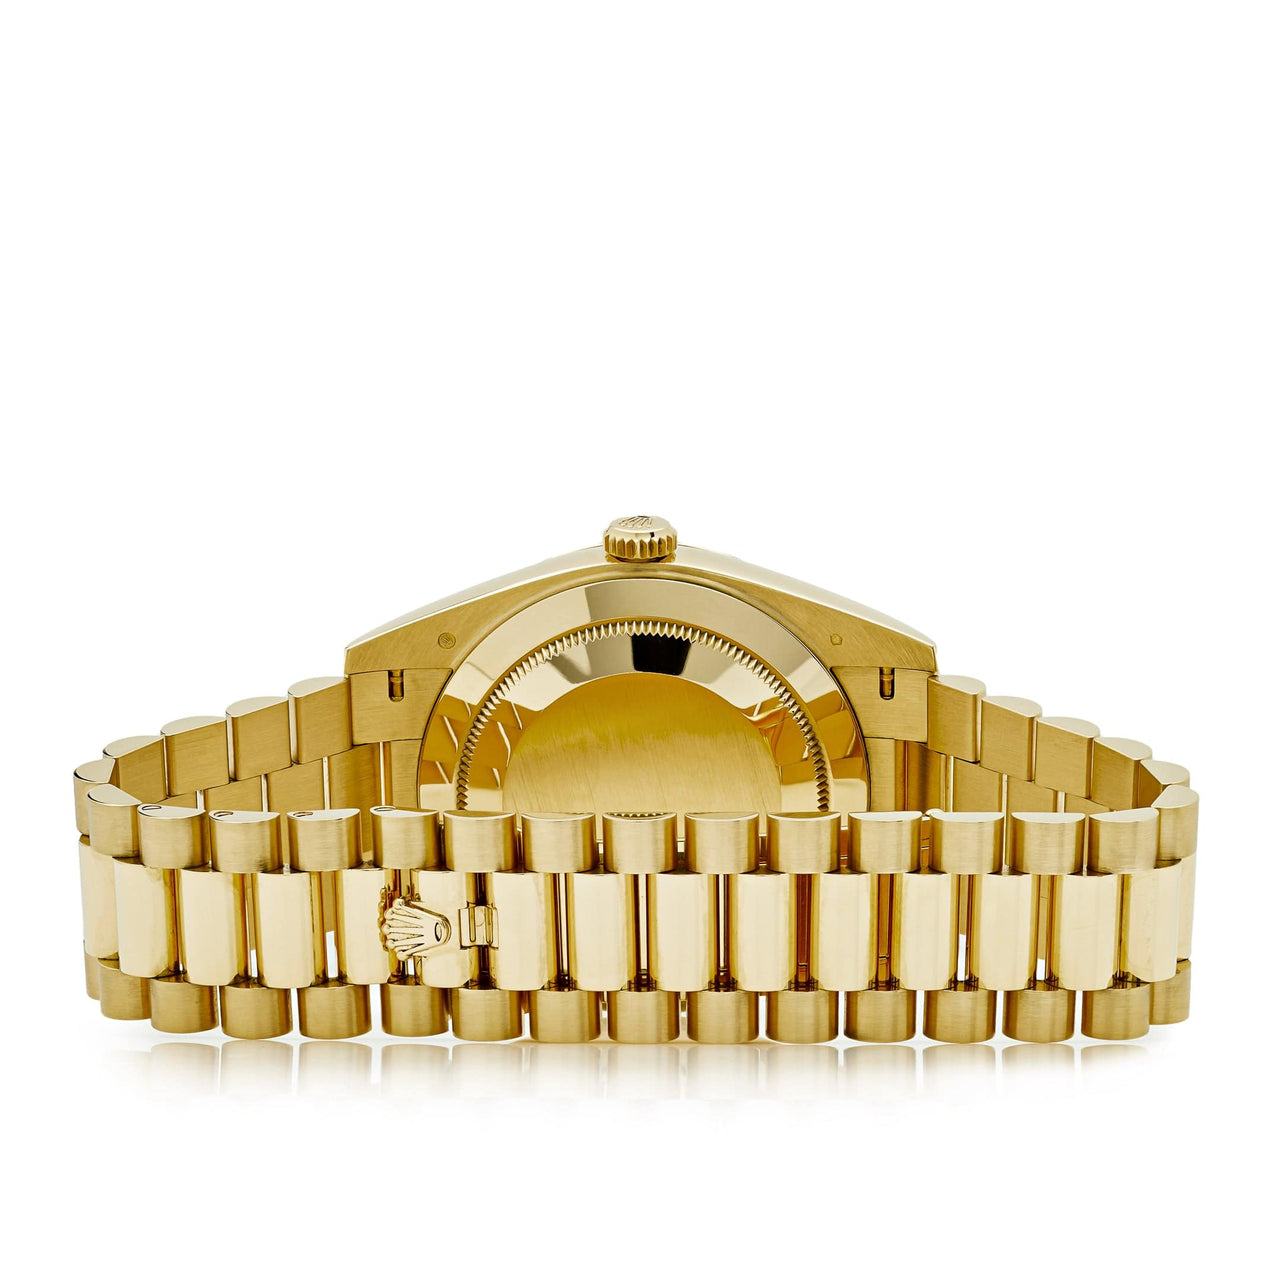 Luxury Watch Rolex Day-Date 40 Yellow Gold Green Dial 228238 Wrist Aficionado